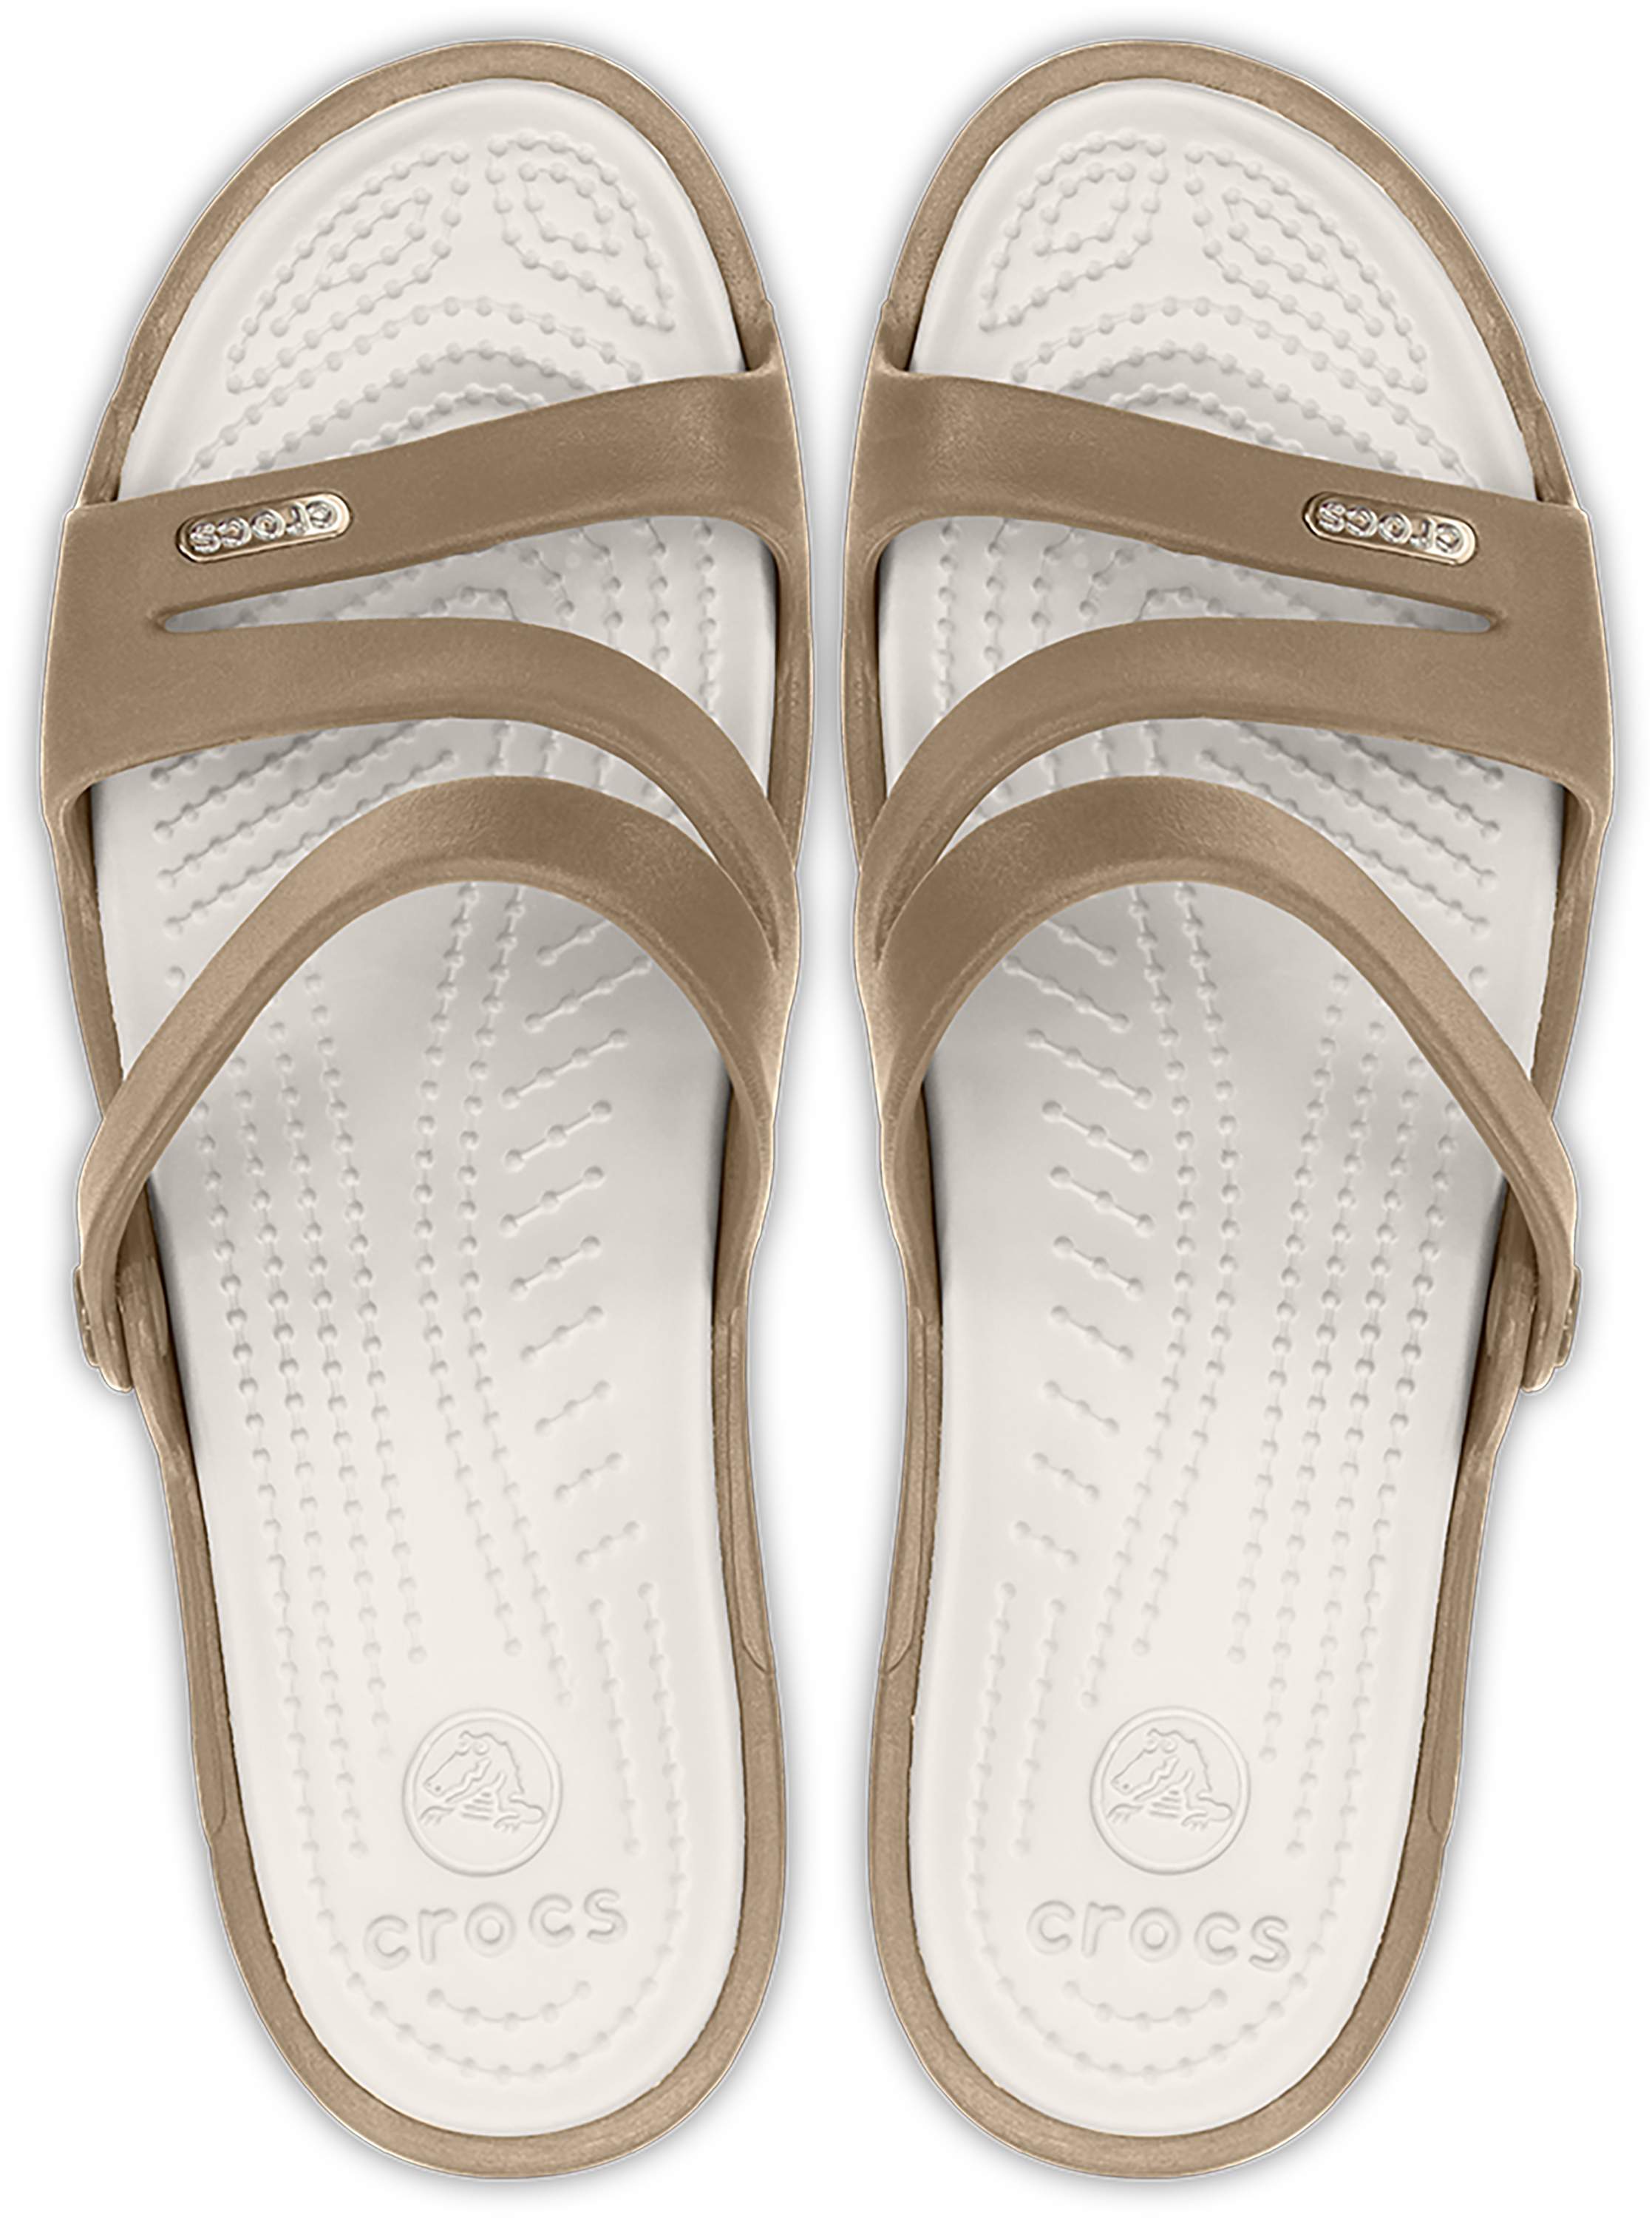 crocs patricia ii wedge sandal